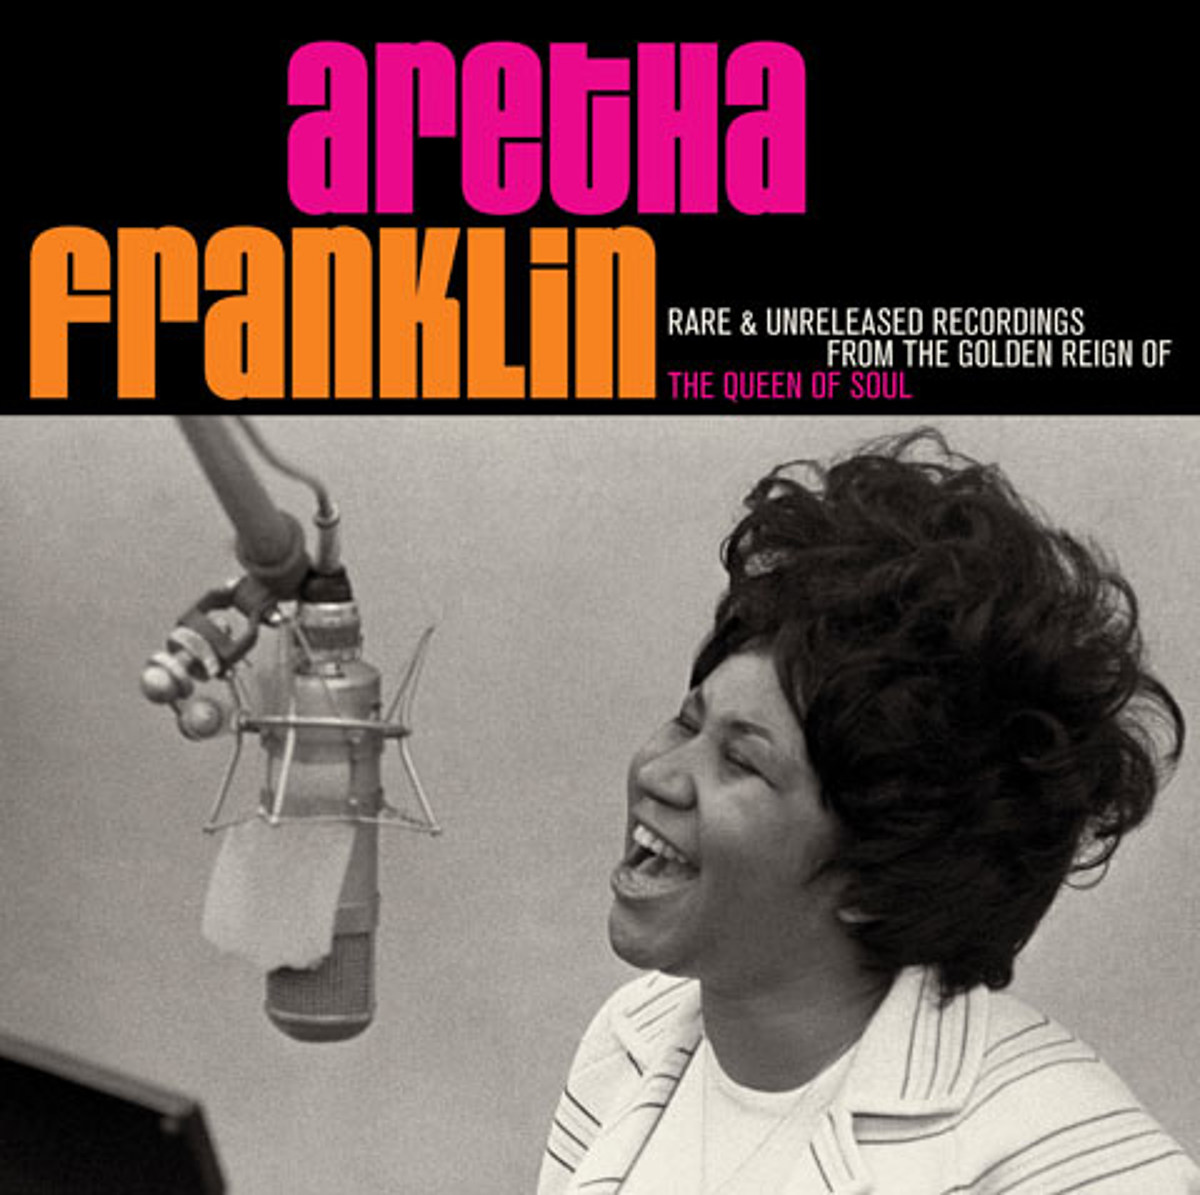 Aretha Franklin honored, announces 2 Radio City shows